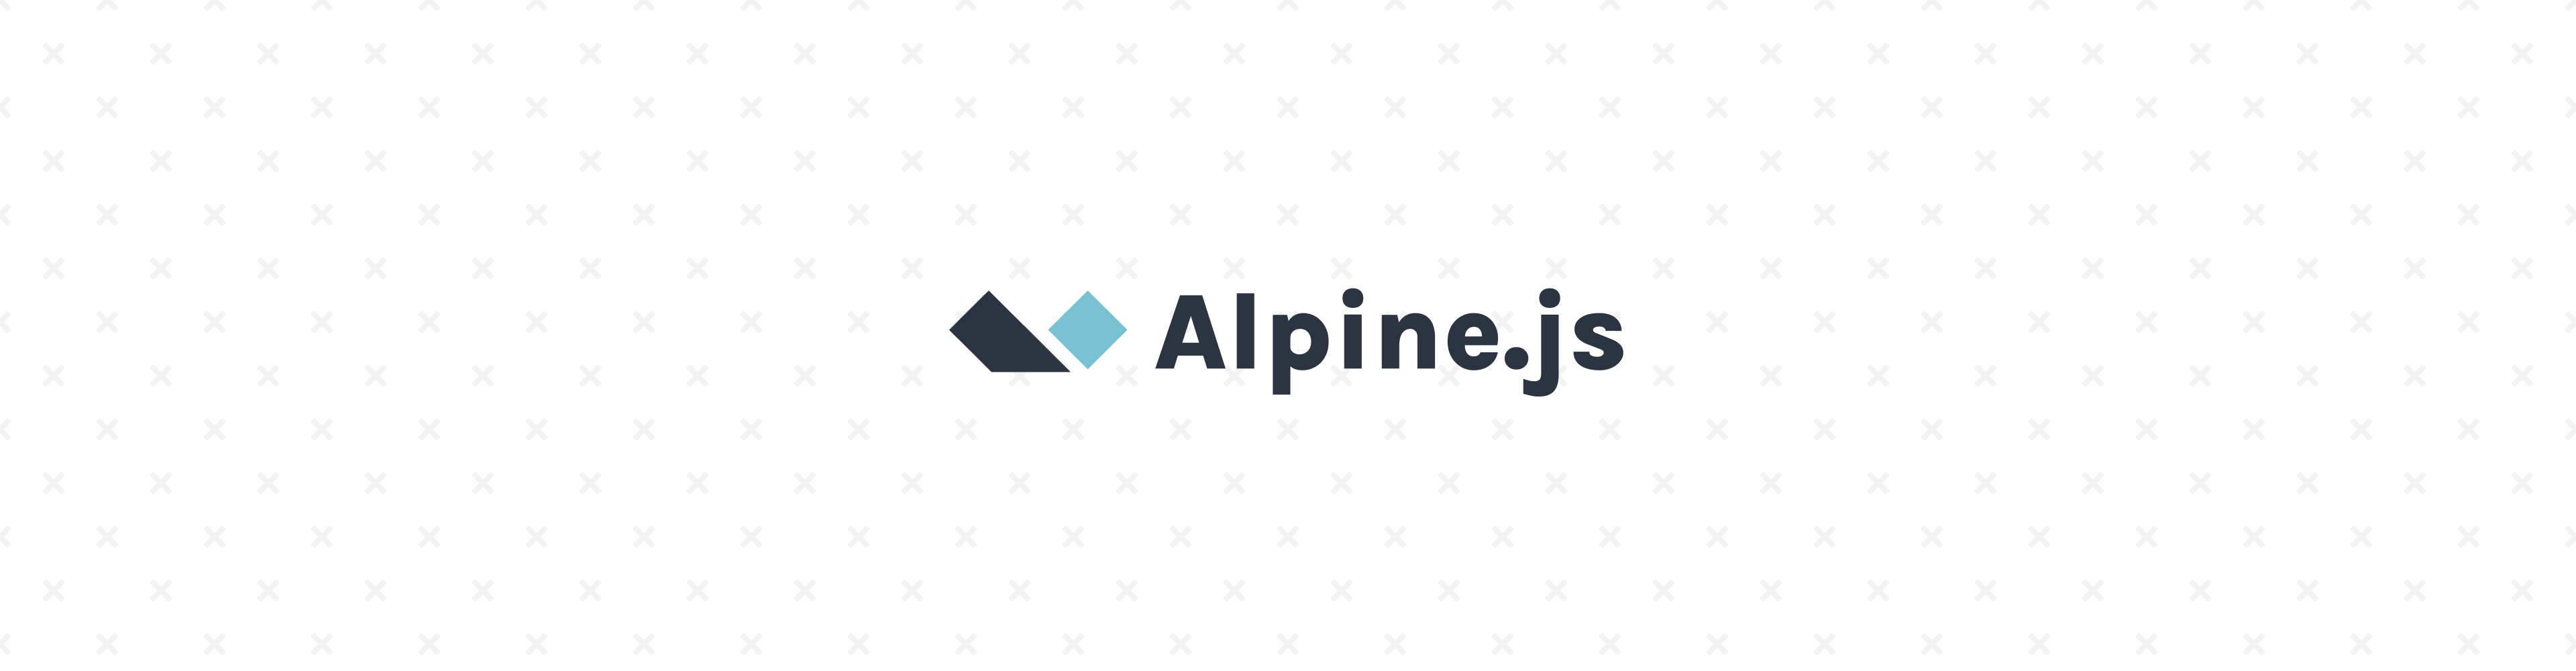 Alpine.js logo banner